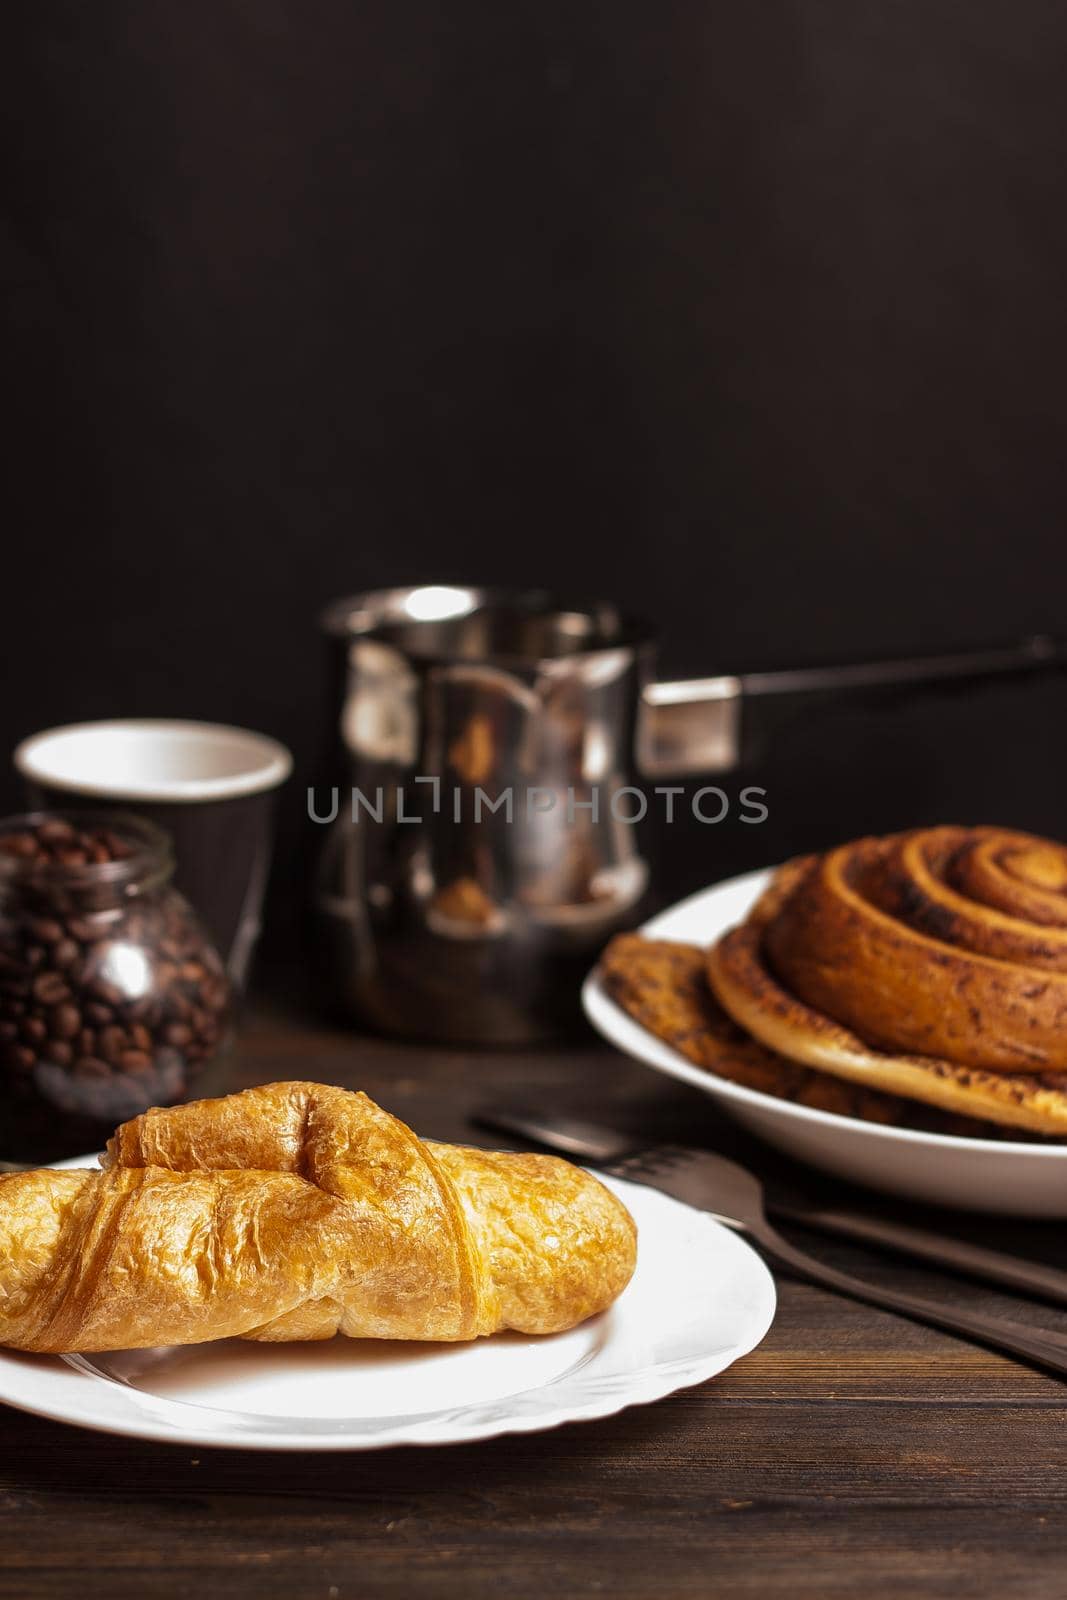 heart-shaped cookies dessert sweets coffee meal breakfast by SHOTPRIME